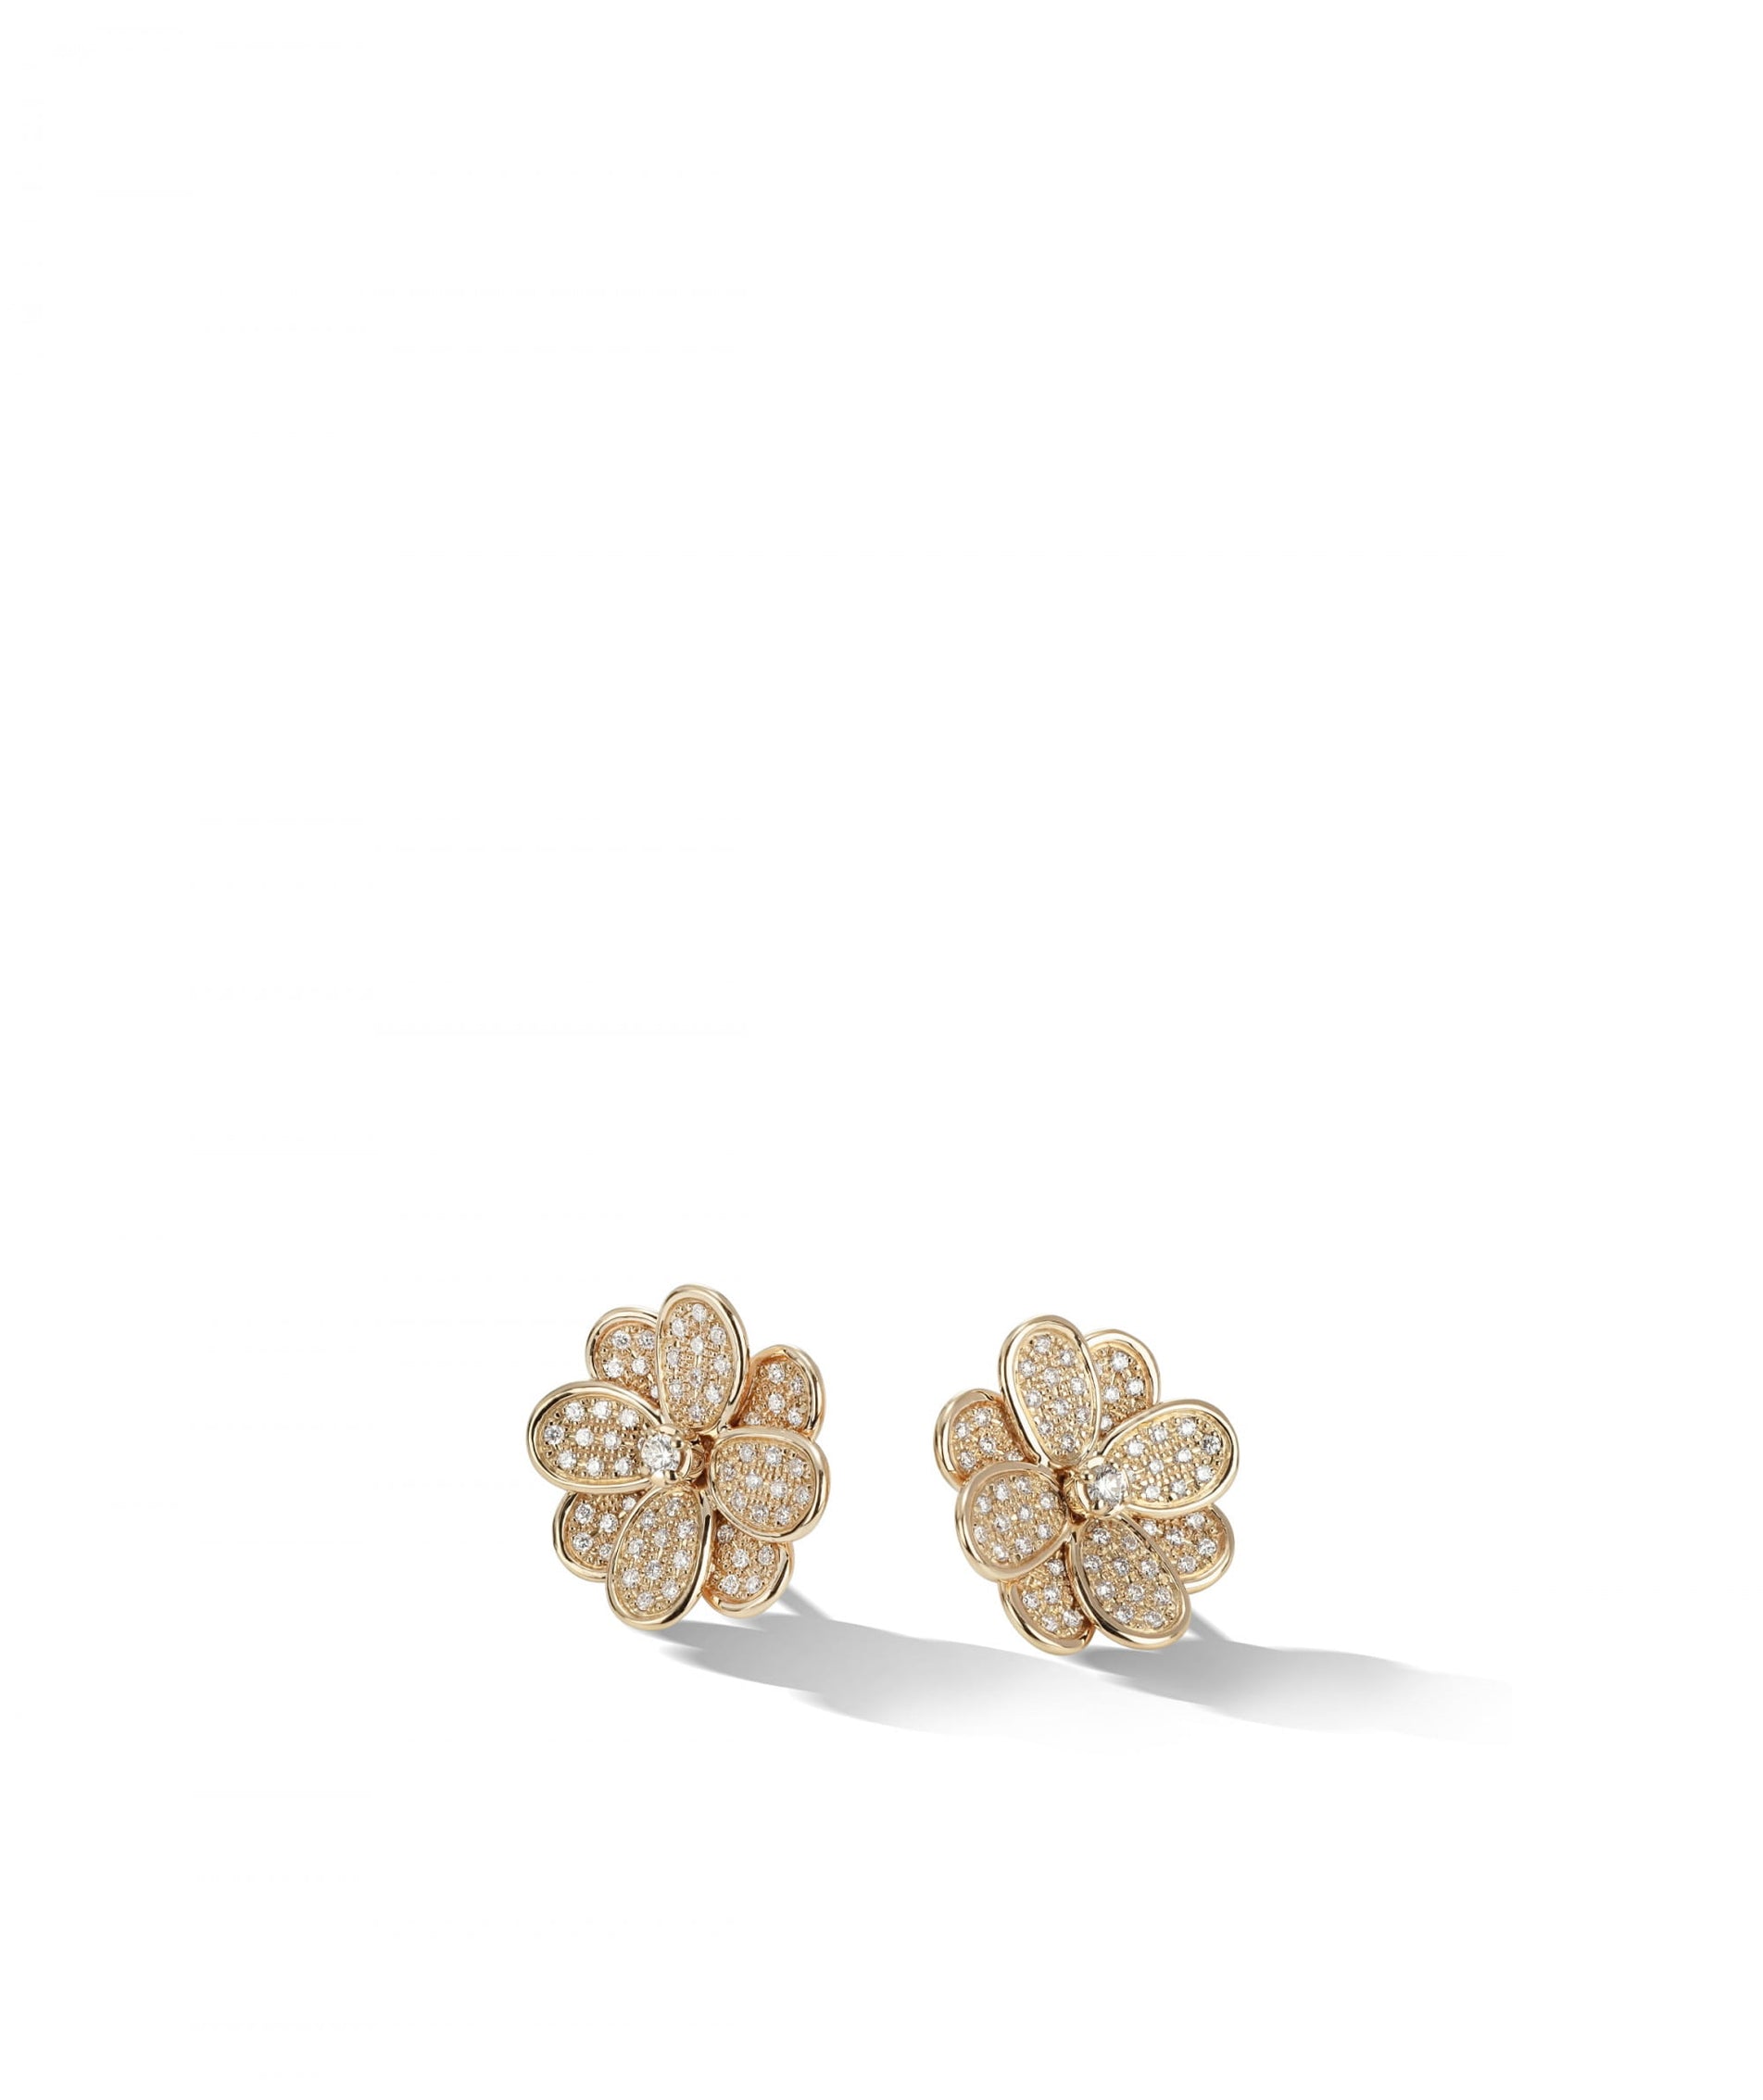 Marco Bicego Petali Earrings in 18k Gold with Pave Diamonds - Orsini Jewellers NZ